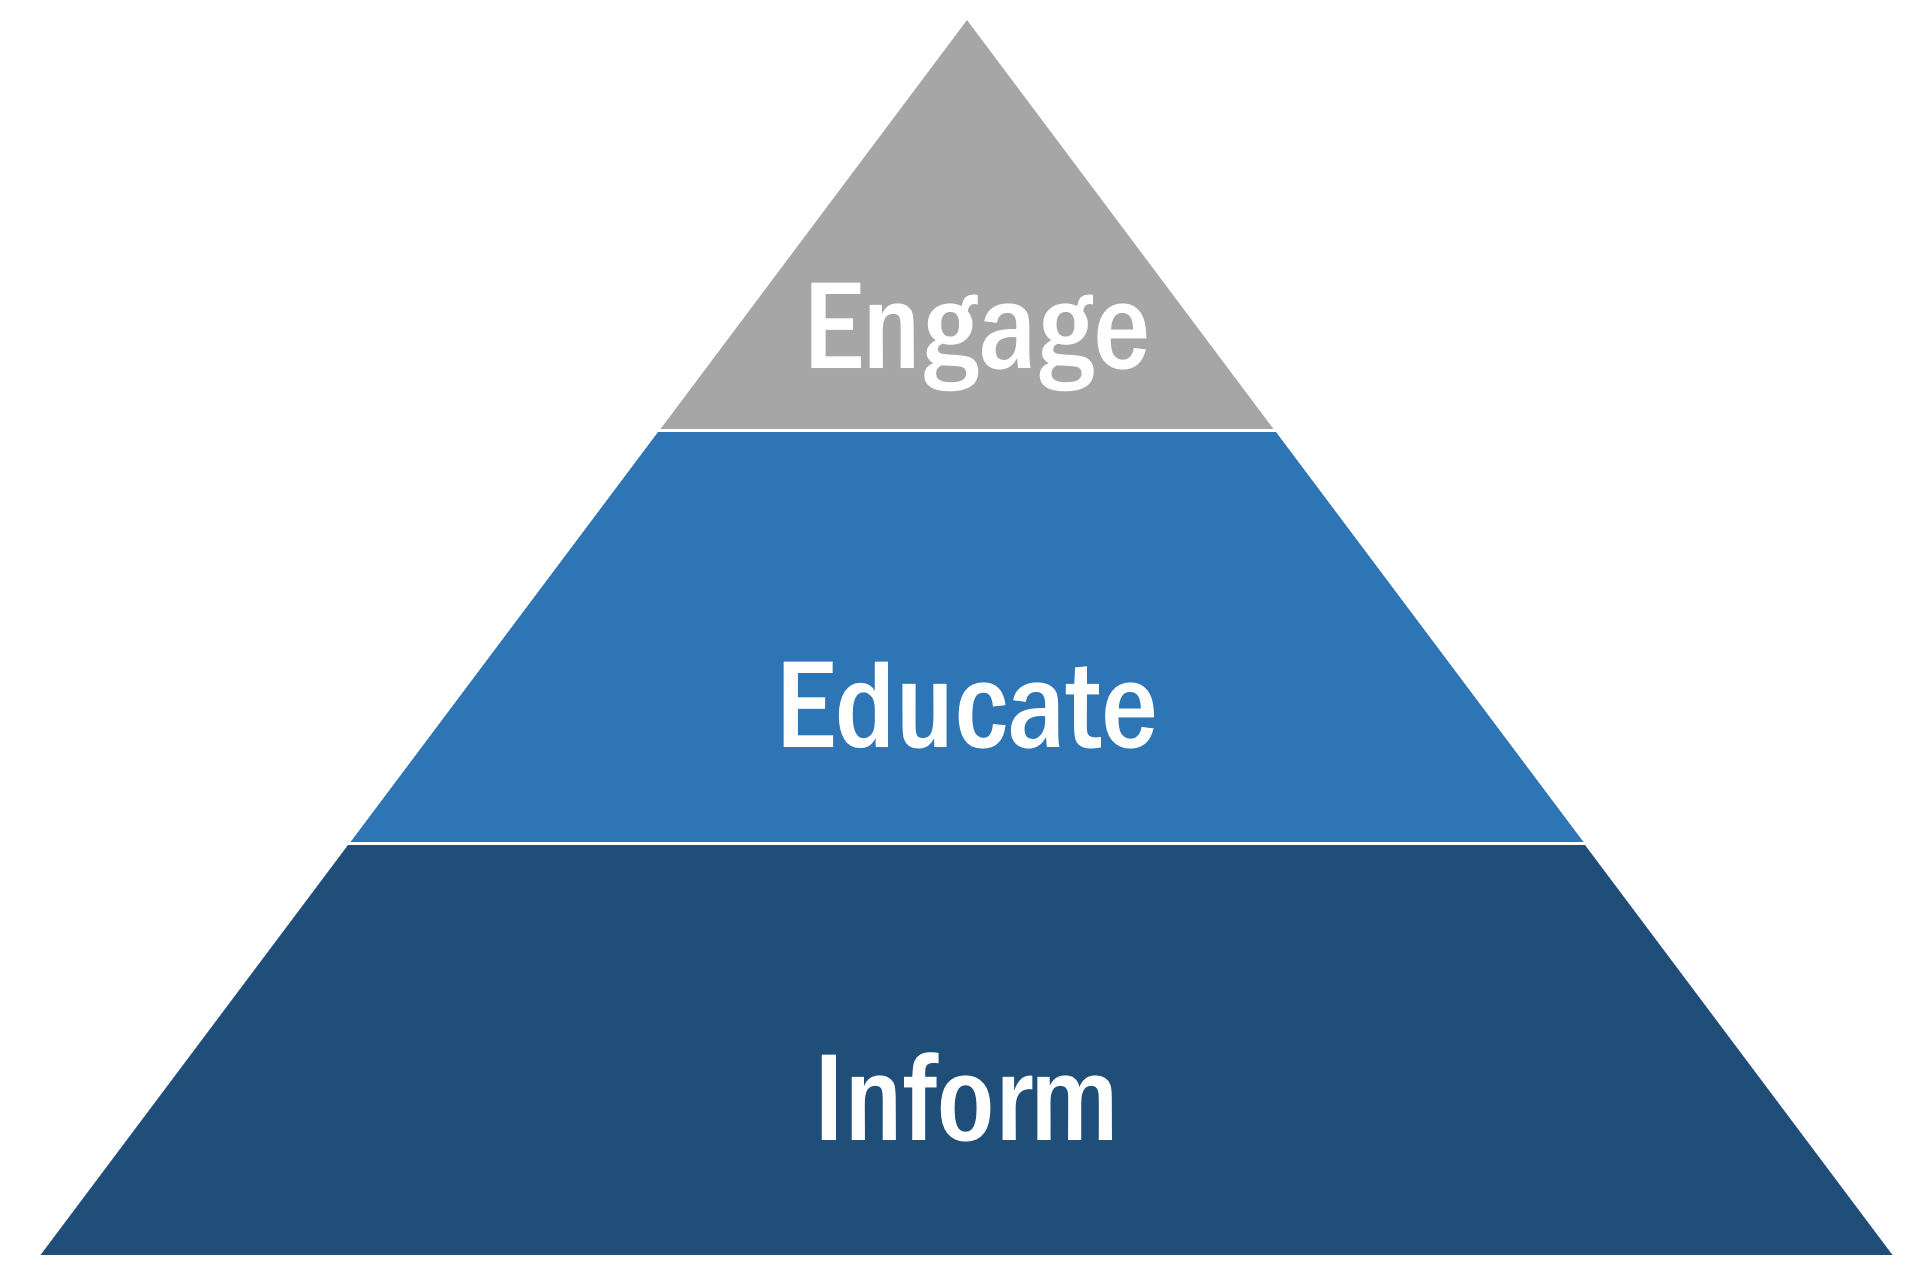 Effectively Expanding Community Engagement Pyramid. 3 levels on the pyramid. Top level "Engage". Middle level "Educate". Bottom level "Inform".